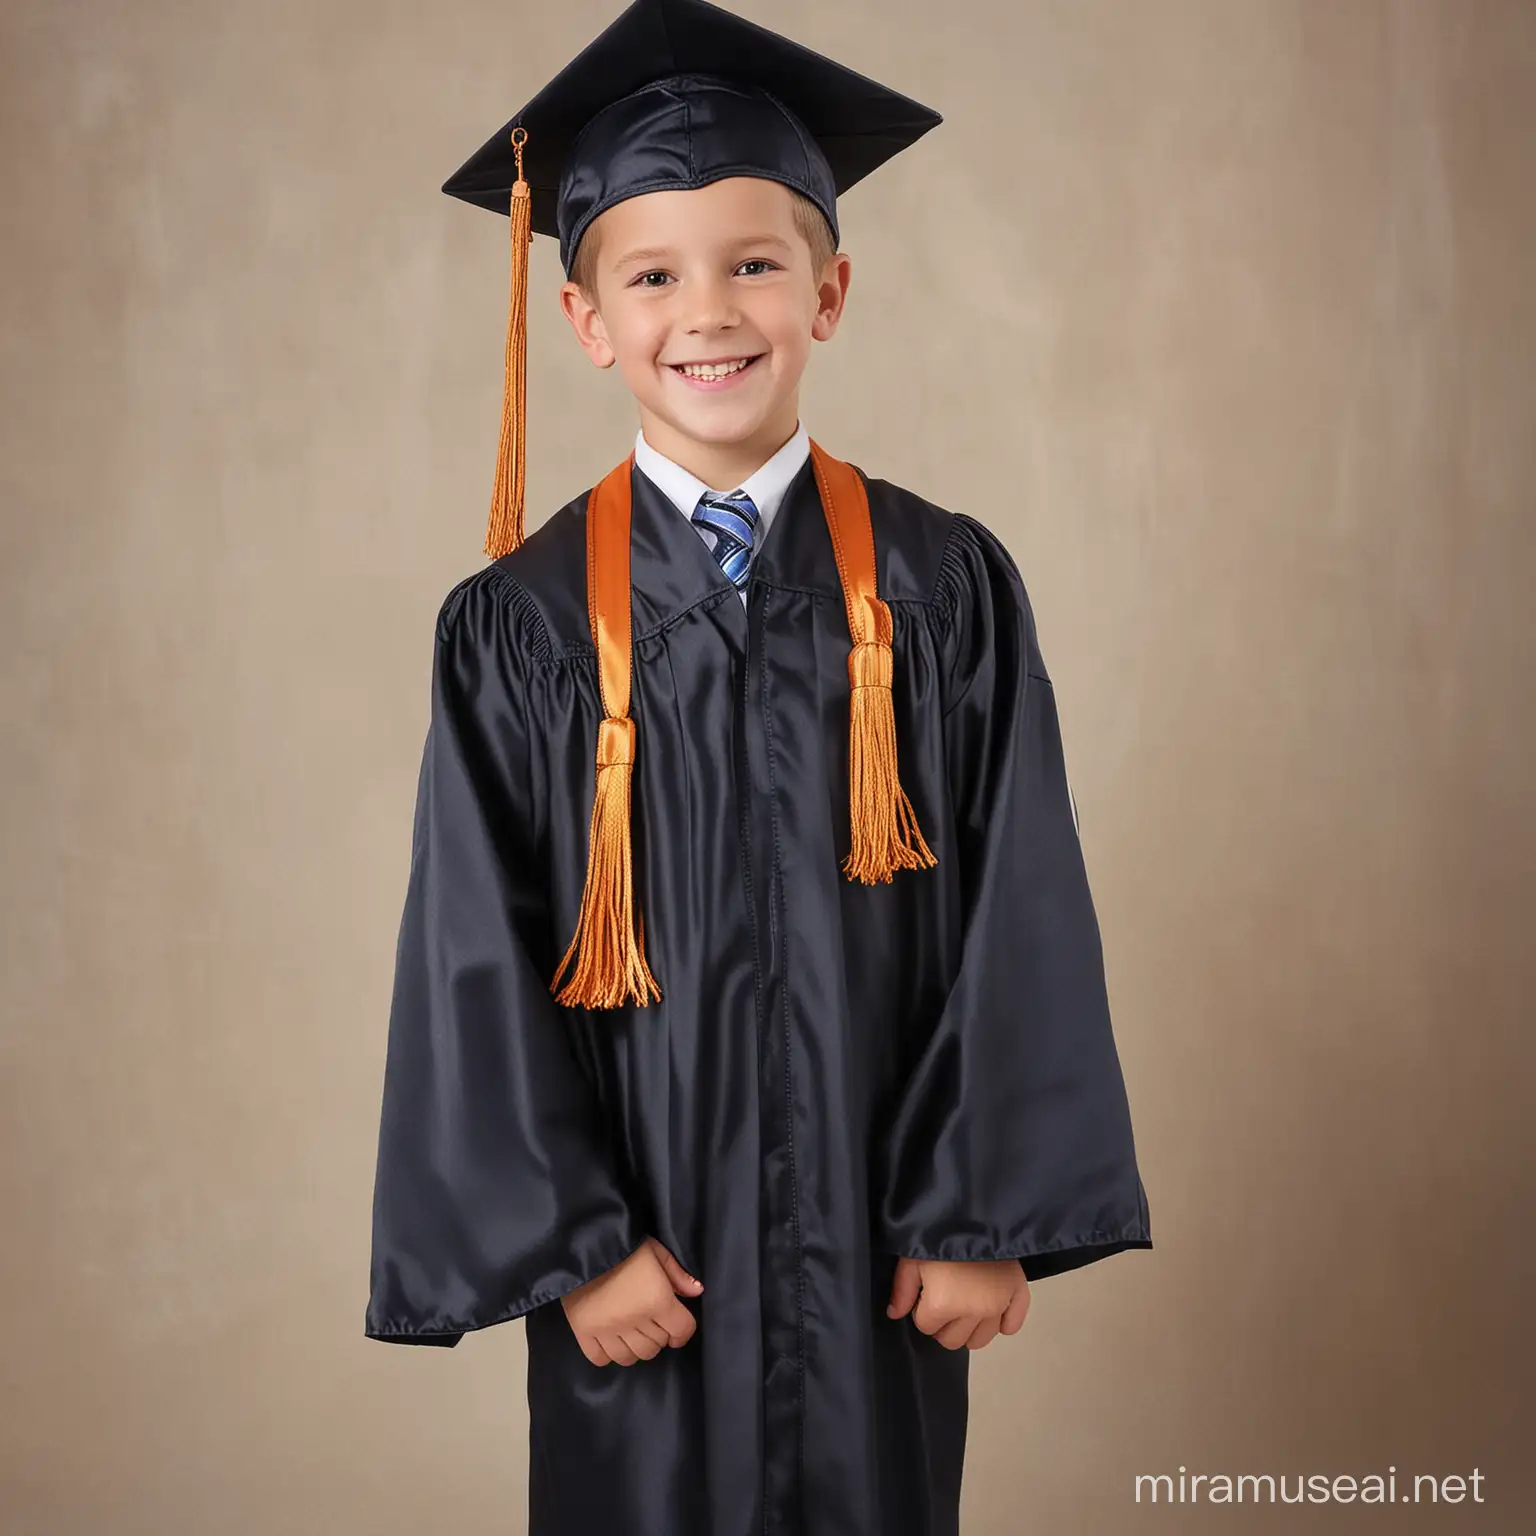 Cheerful Kindergarten Graduate in Cap and Gown Smiling